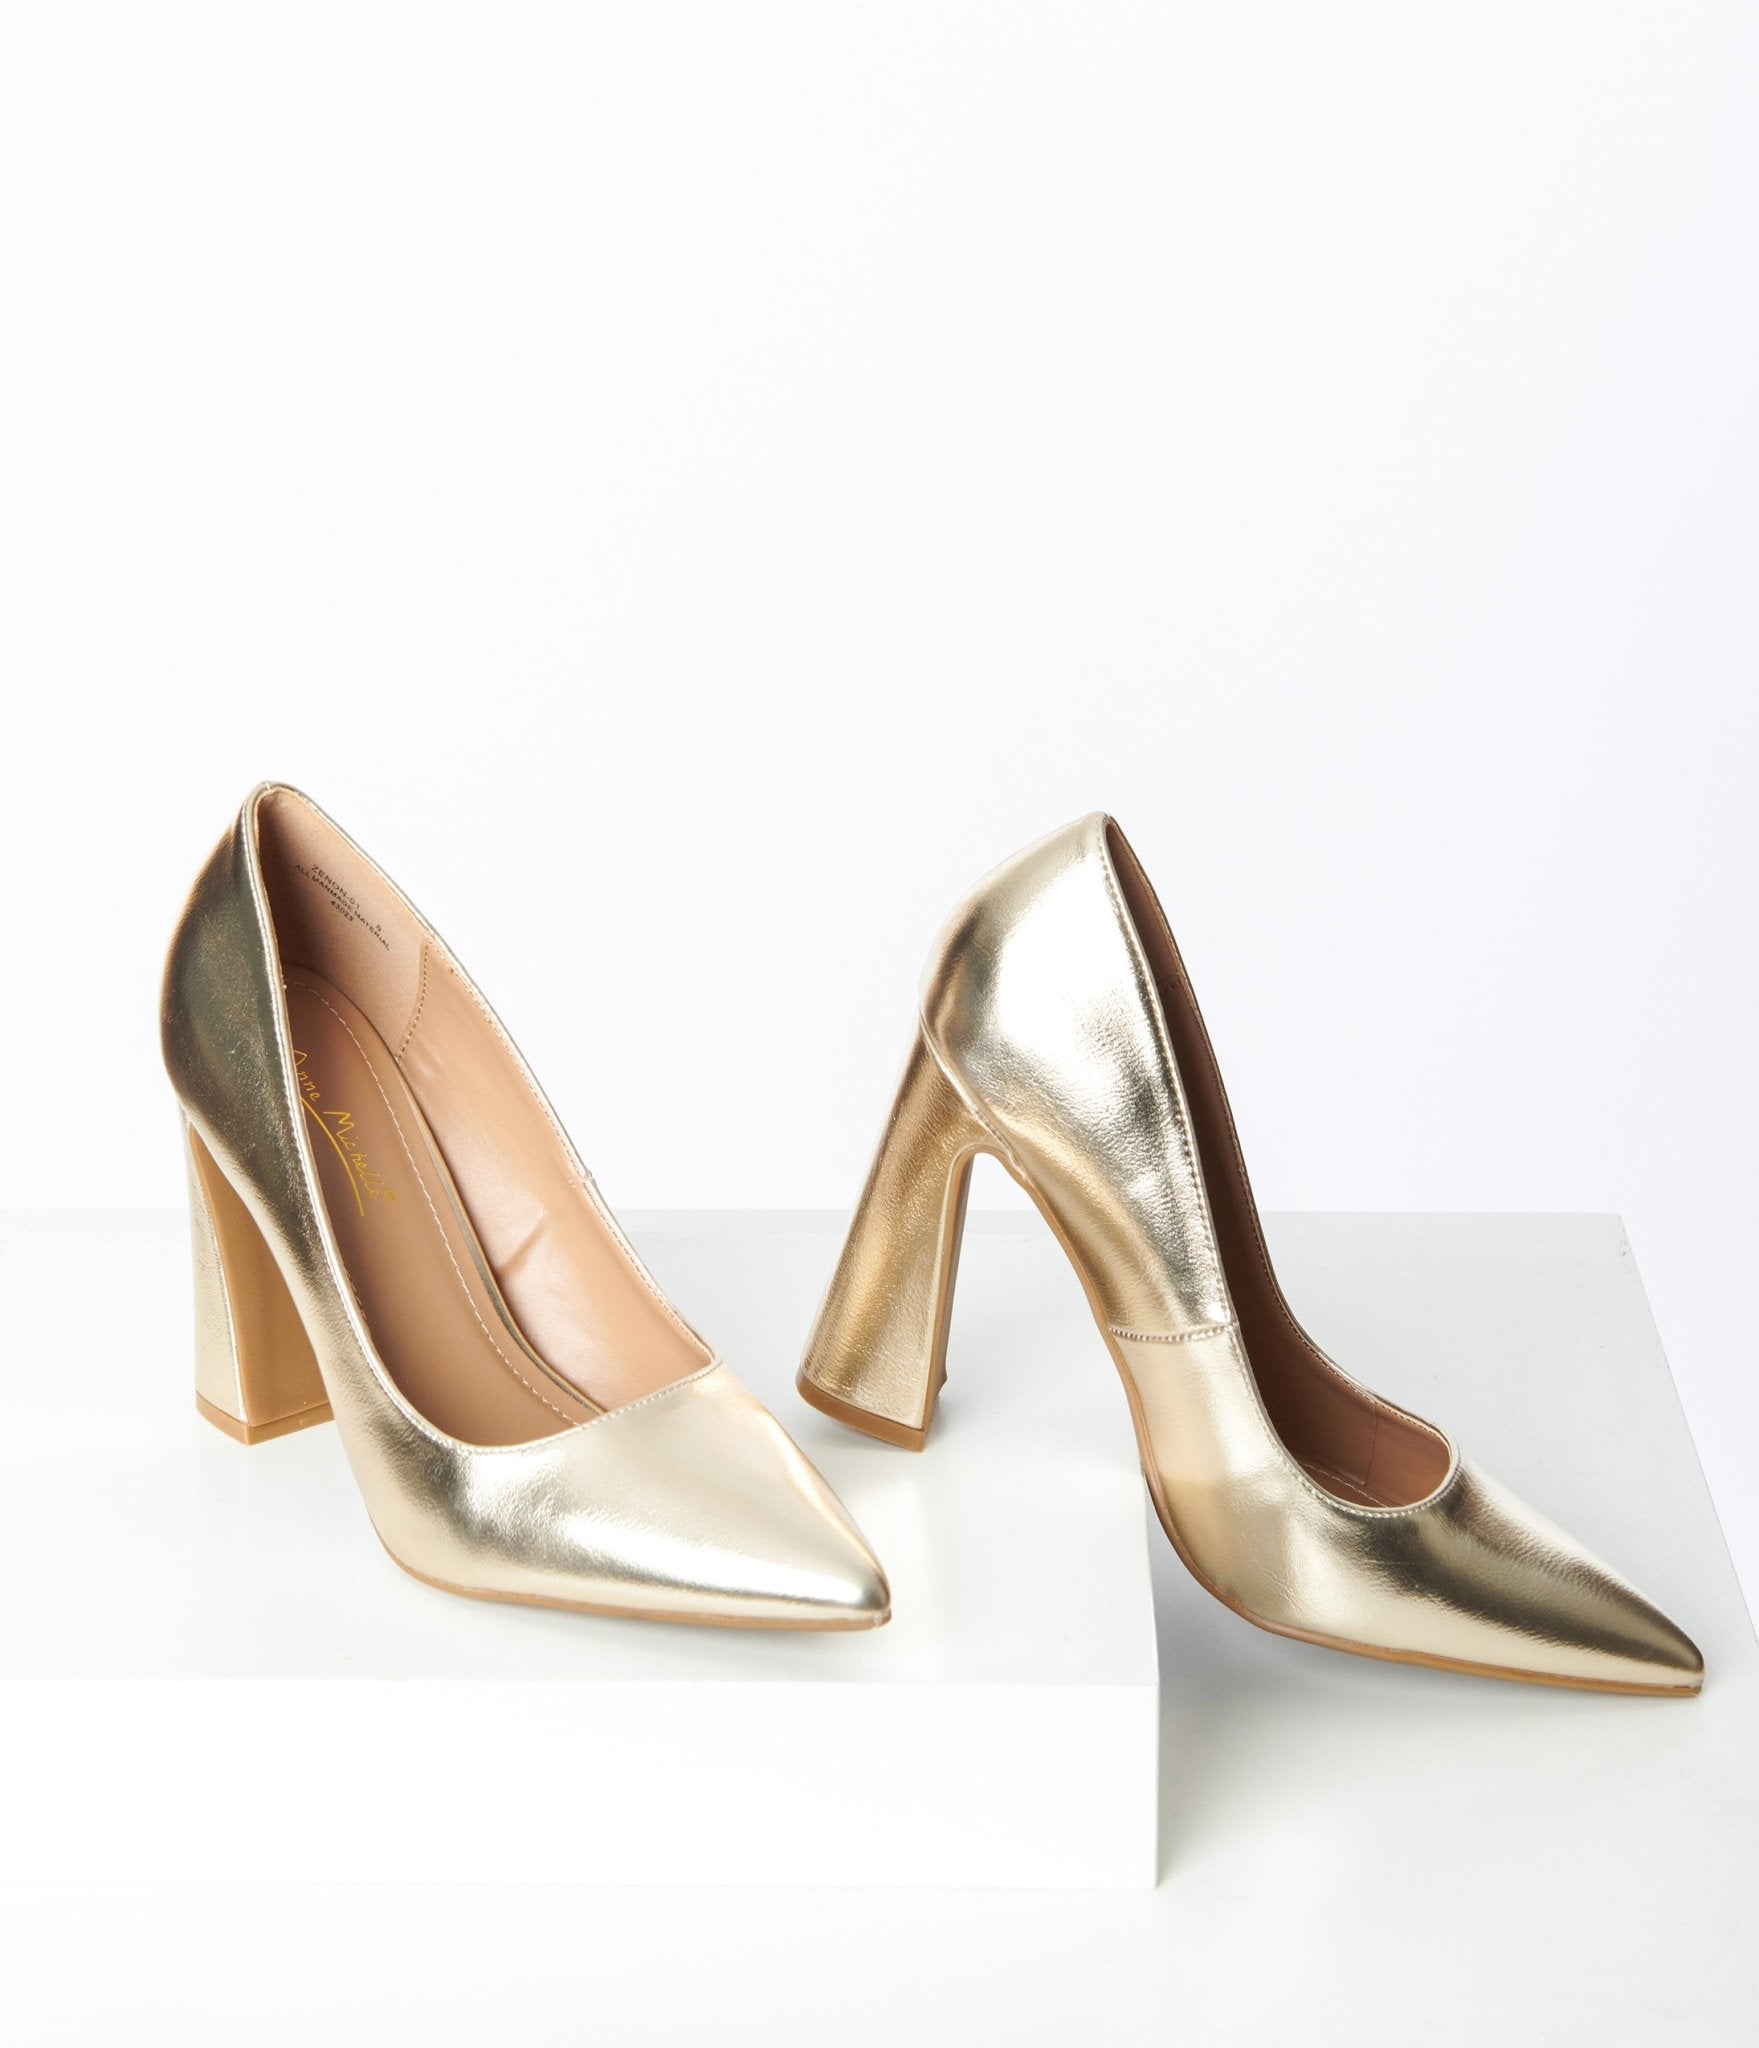 Gold Shoe Clips 3D Bows for Shoes ,brokade Shoe Clips ,glitter